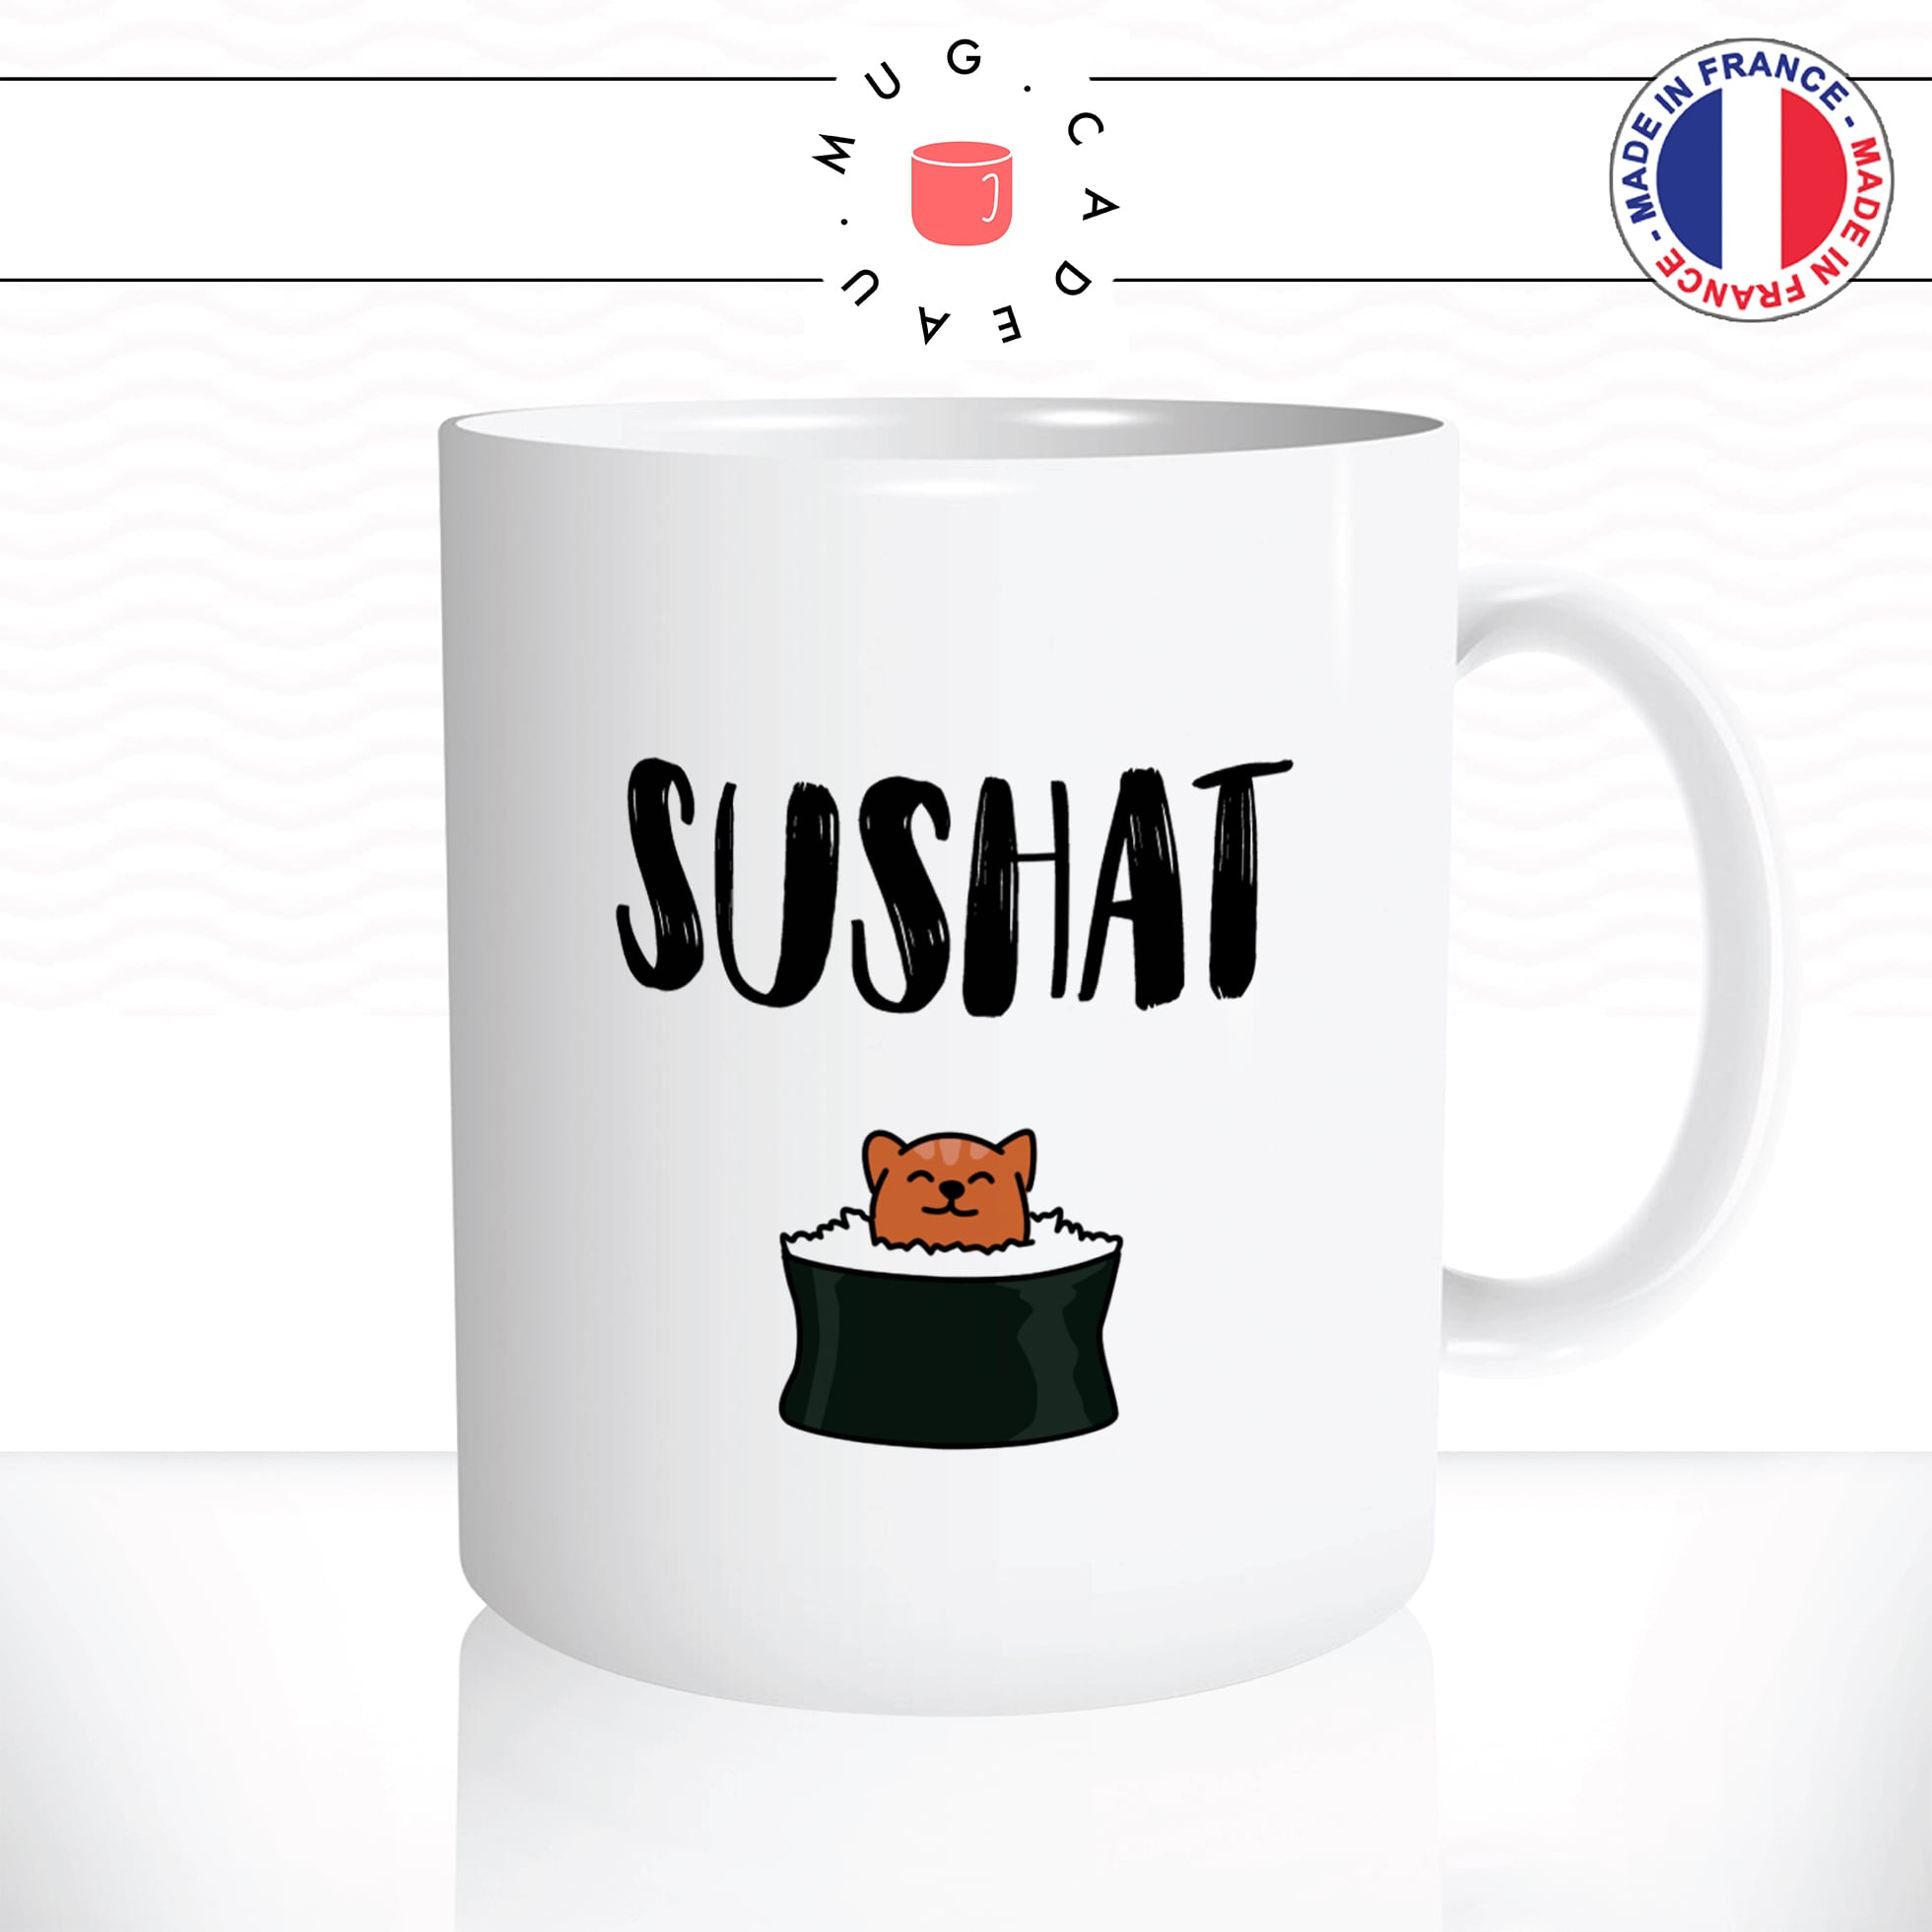 mug-tasse-sushat-chat-chaton-animal-sushis-makis-california-rolls-japonais-sashimis-nigiri-offrir-fun-humour-idée-cadeau-original-personnalisée2-min